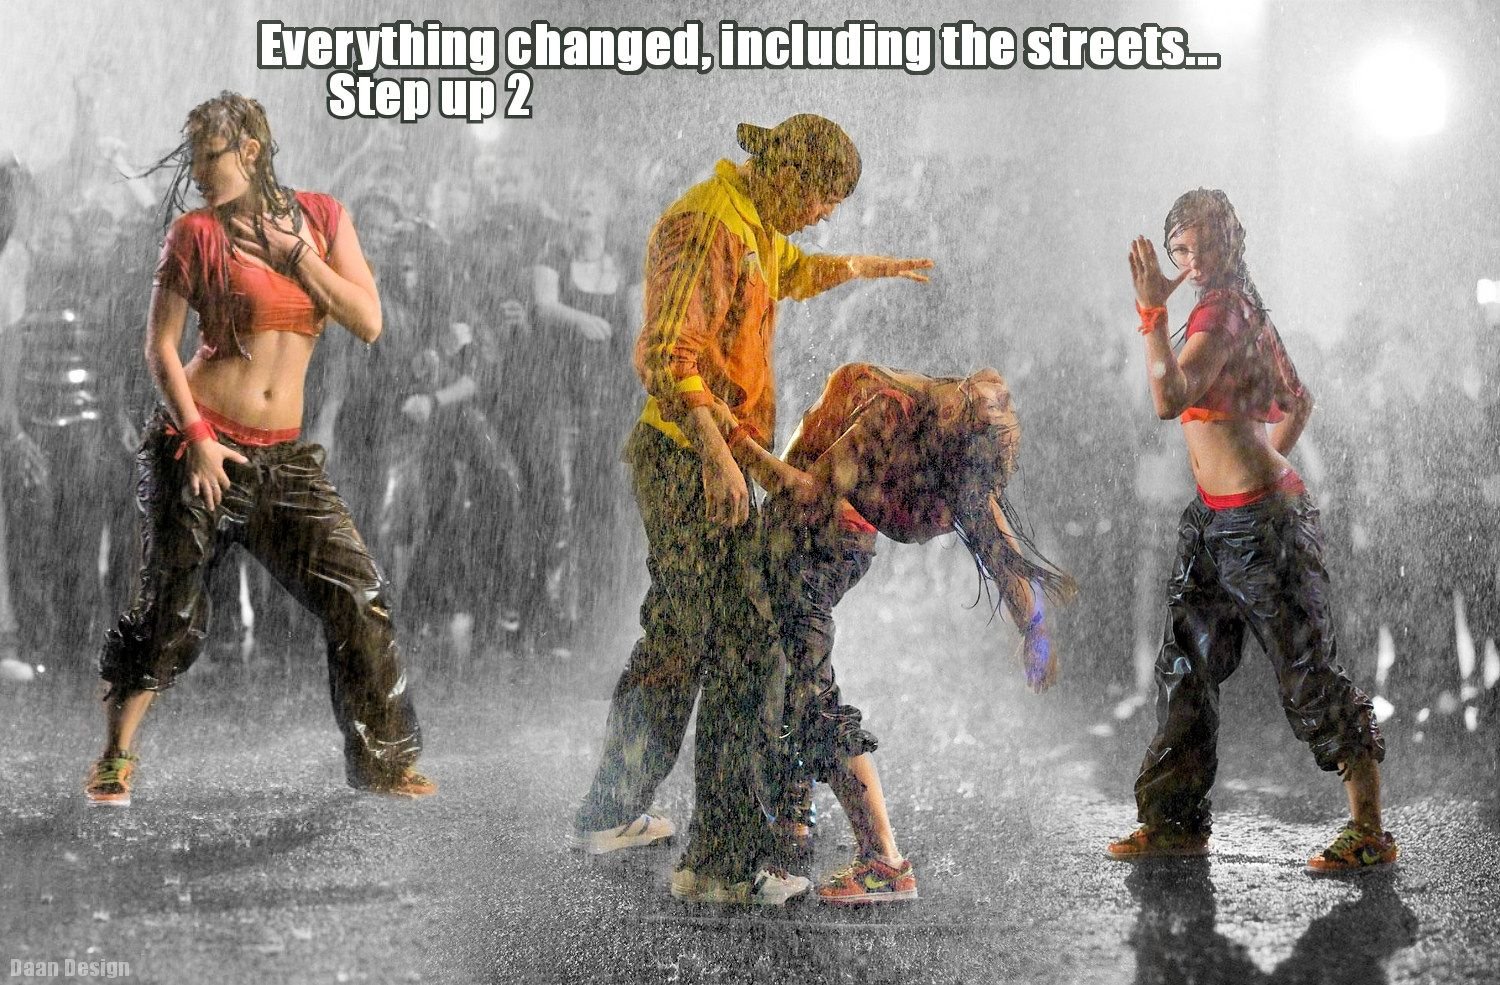 Rain it up 2. Шаг вперед 2 улицы под дождём. Шаг вперед 2 улицы танцы. Танцы под дождем. Шаг вперед под дождем.